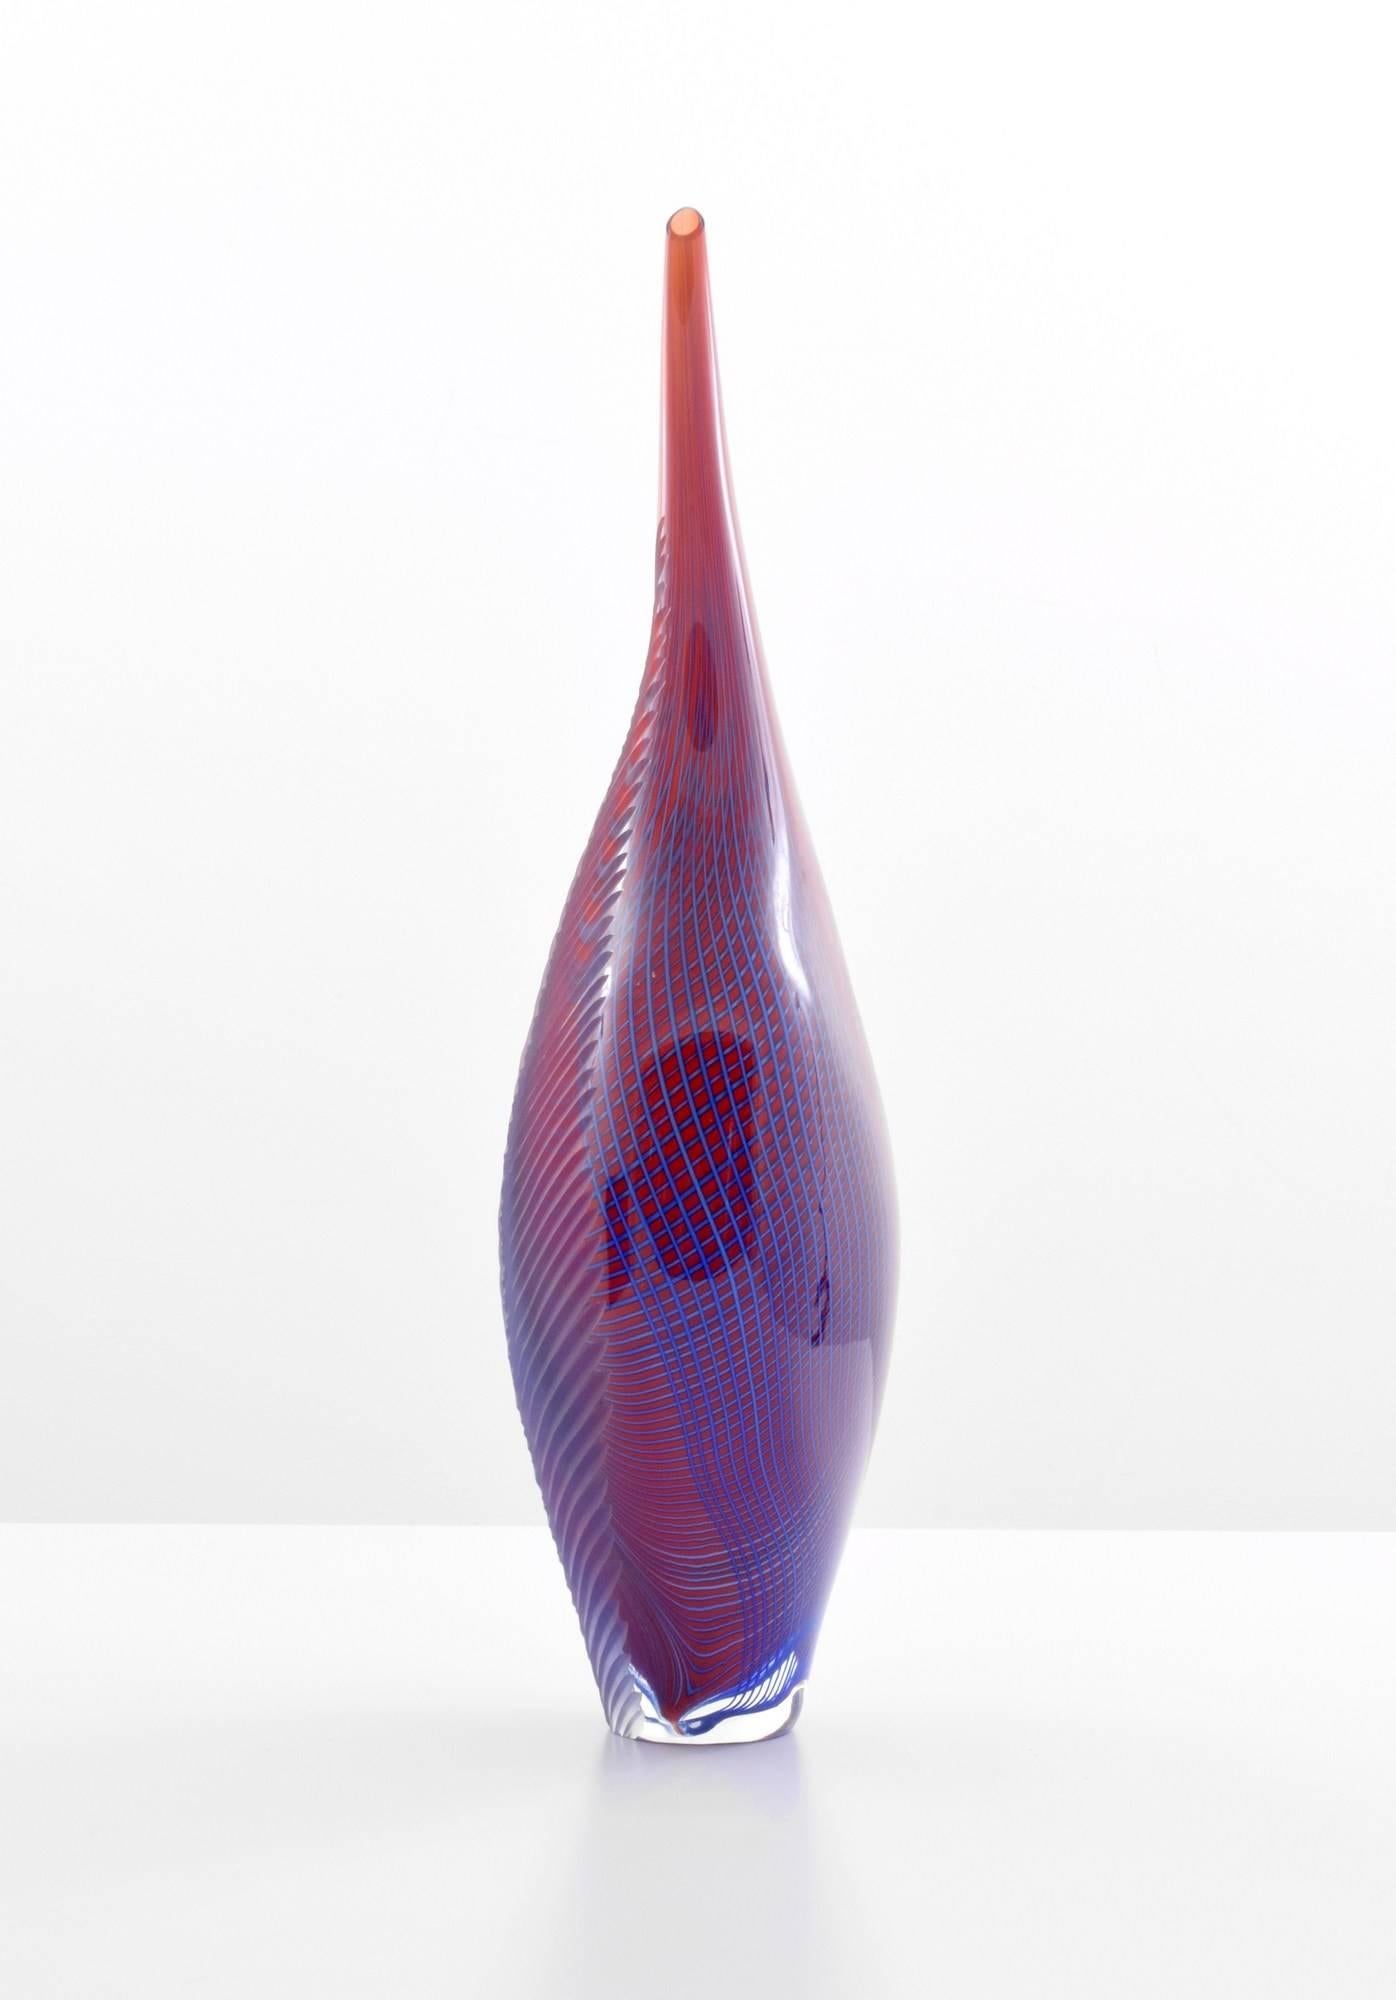 Large vase by Massimiliano Schiavon. Vase is signed.